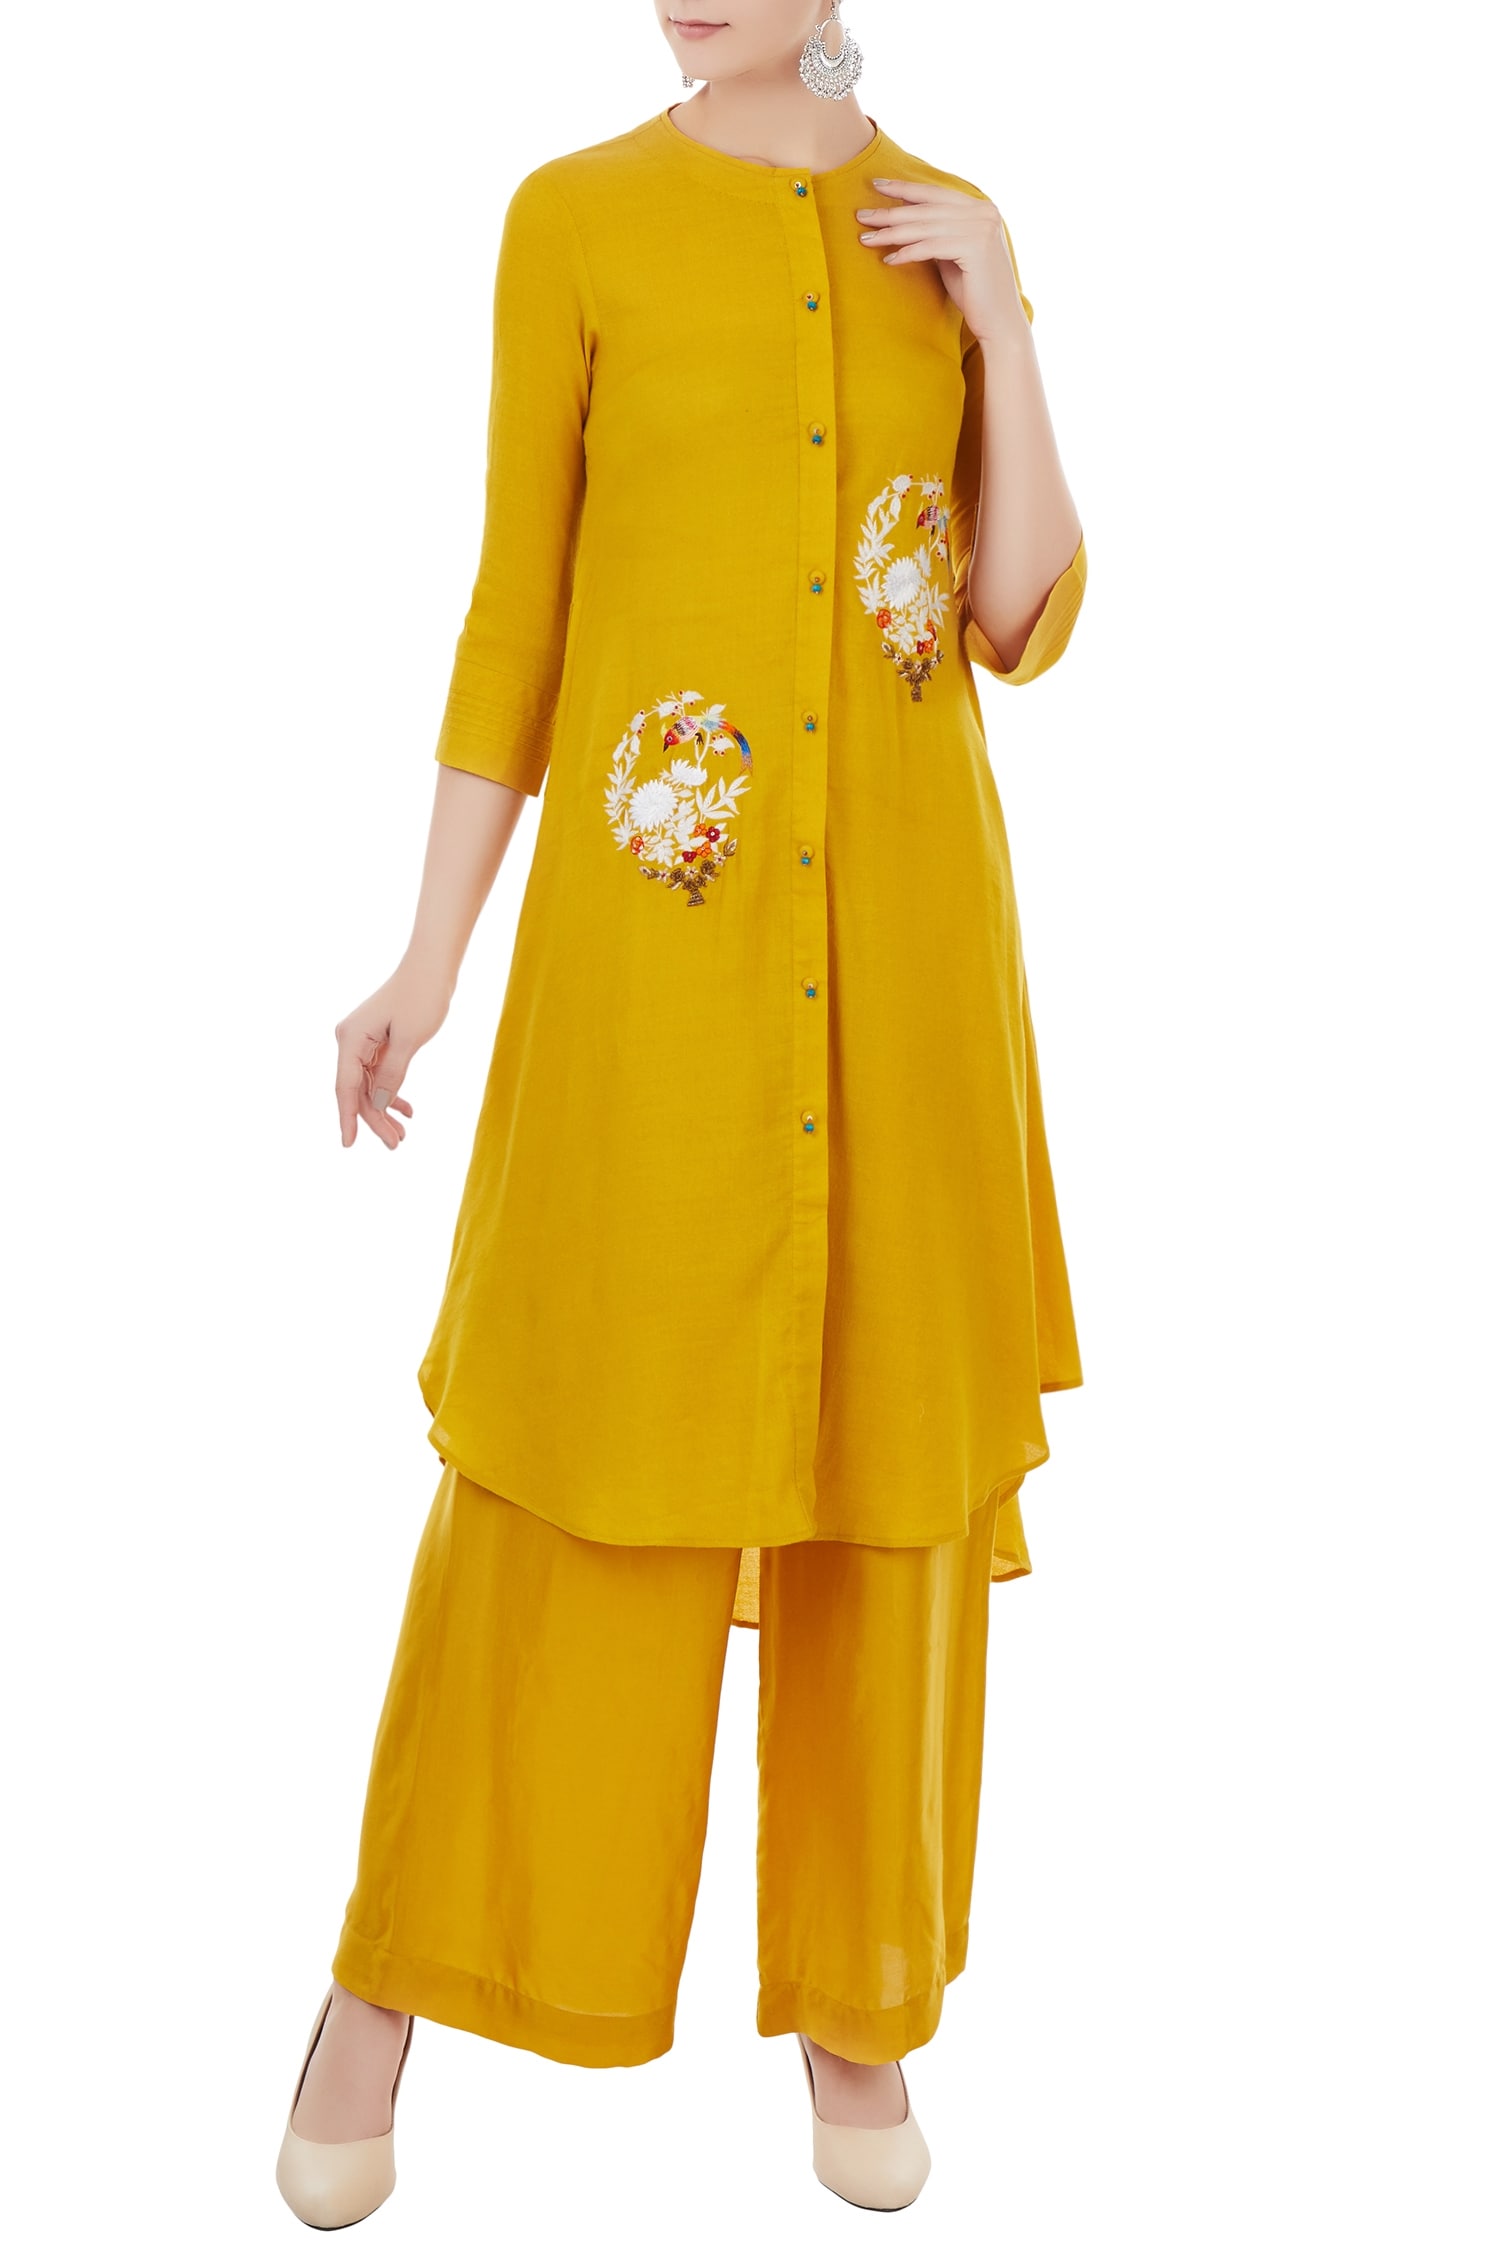 Desert Shine by Sulochana Jangir Yellow Round Linen Georgette Kurta And Pant Set For Women